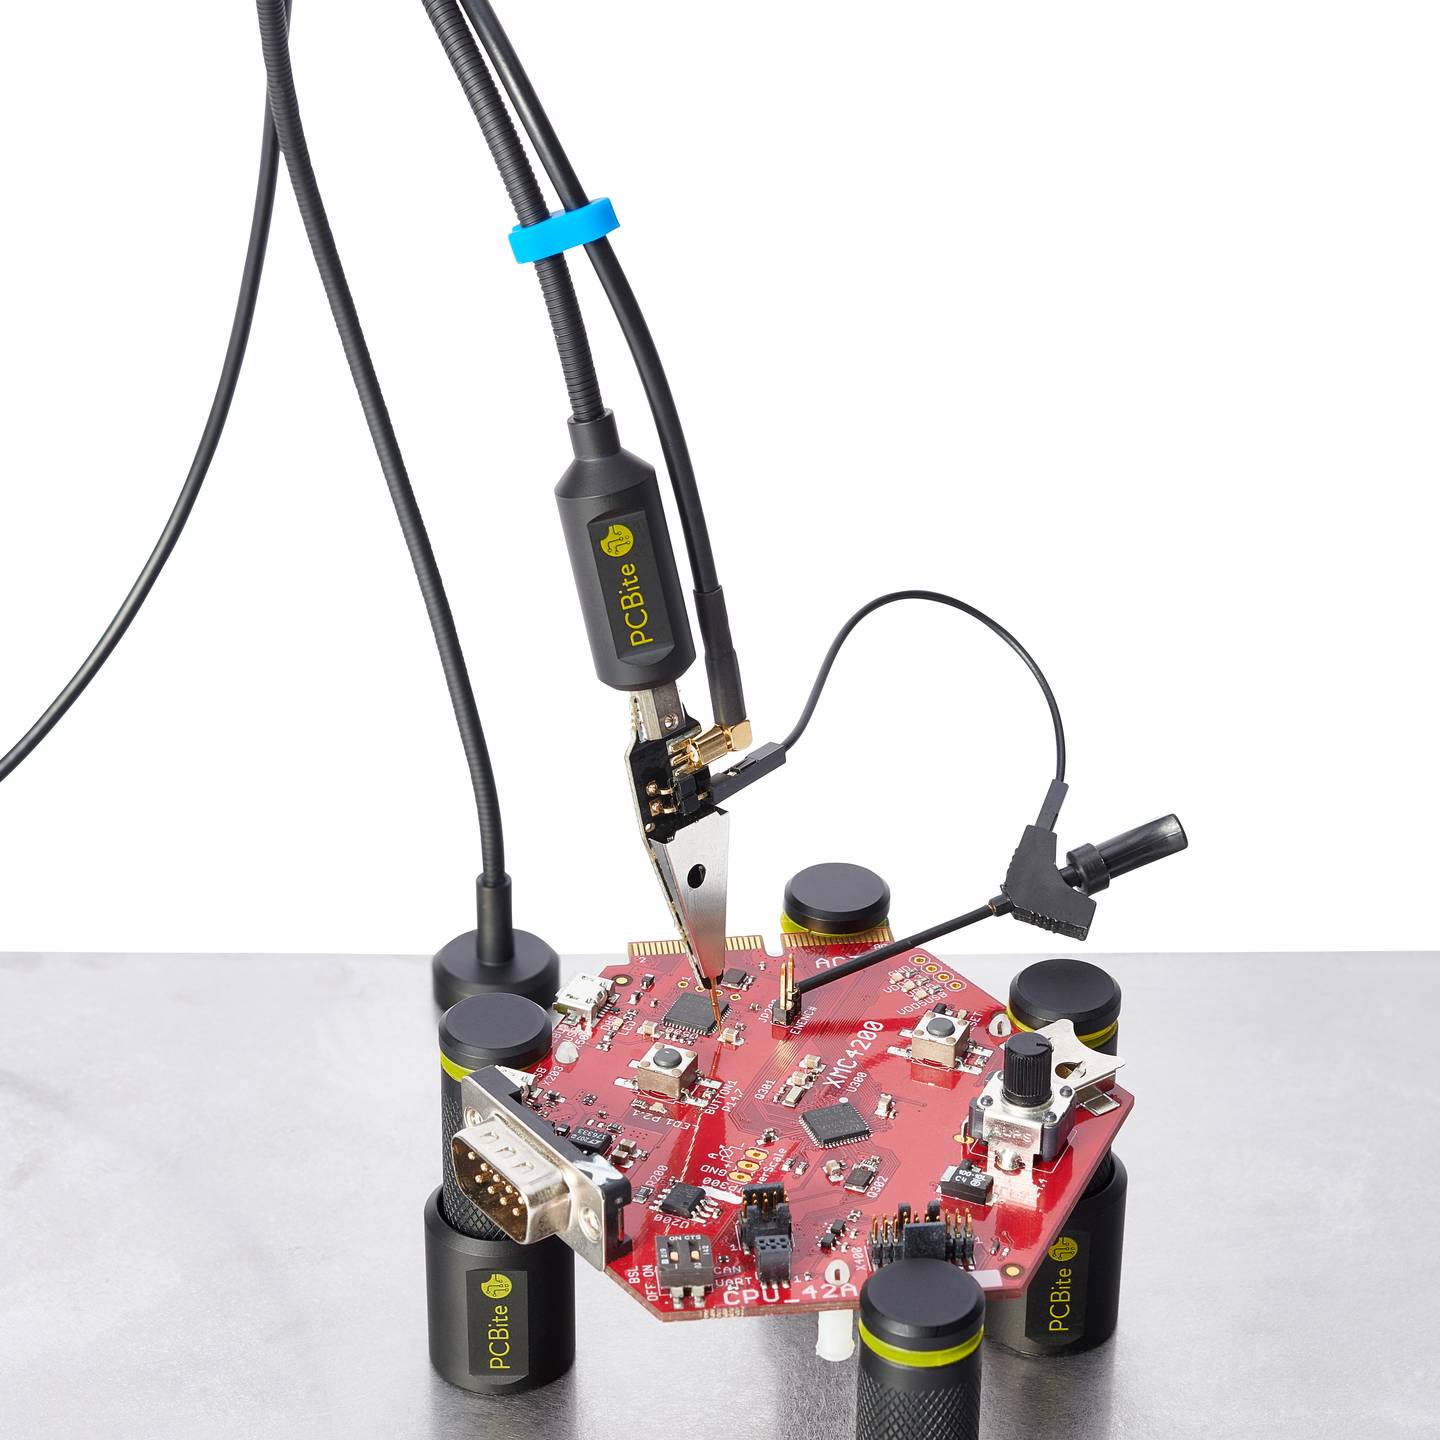 PCBite SP100 - 100 Mhz handsfree oscilloscope probe-sensepeek-K and A Electronics